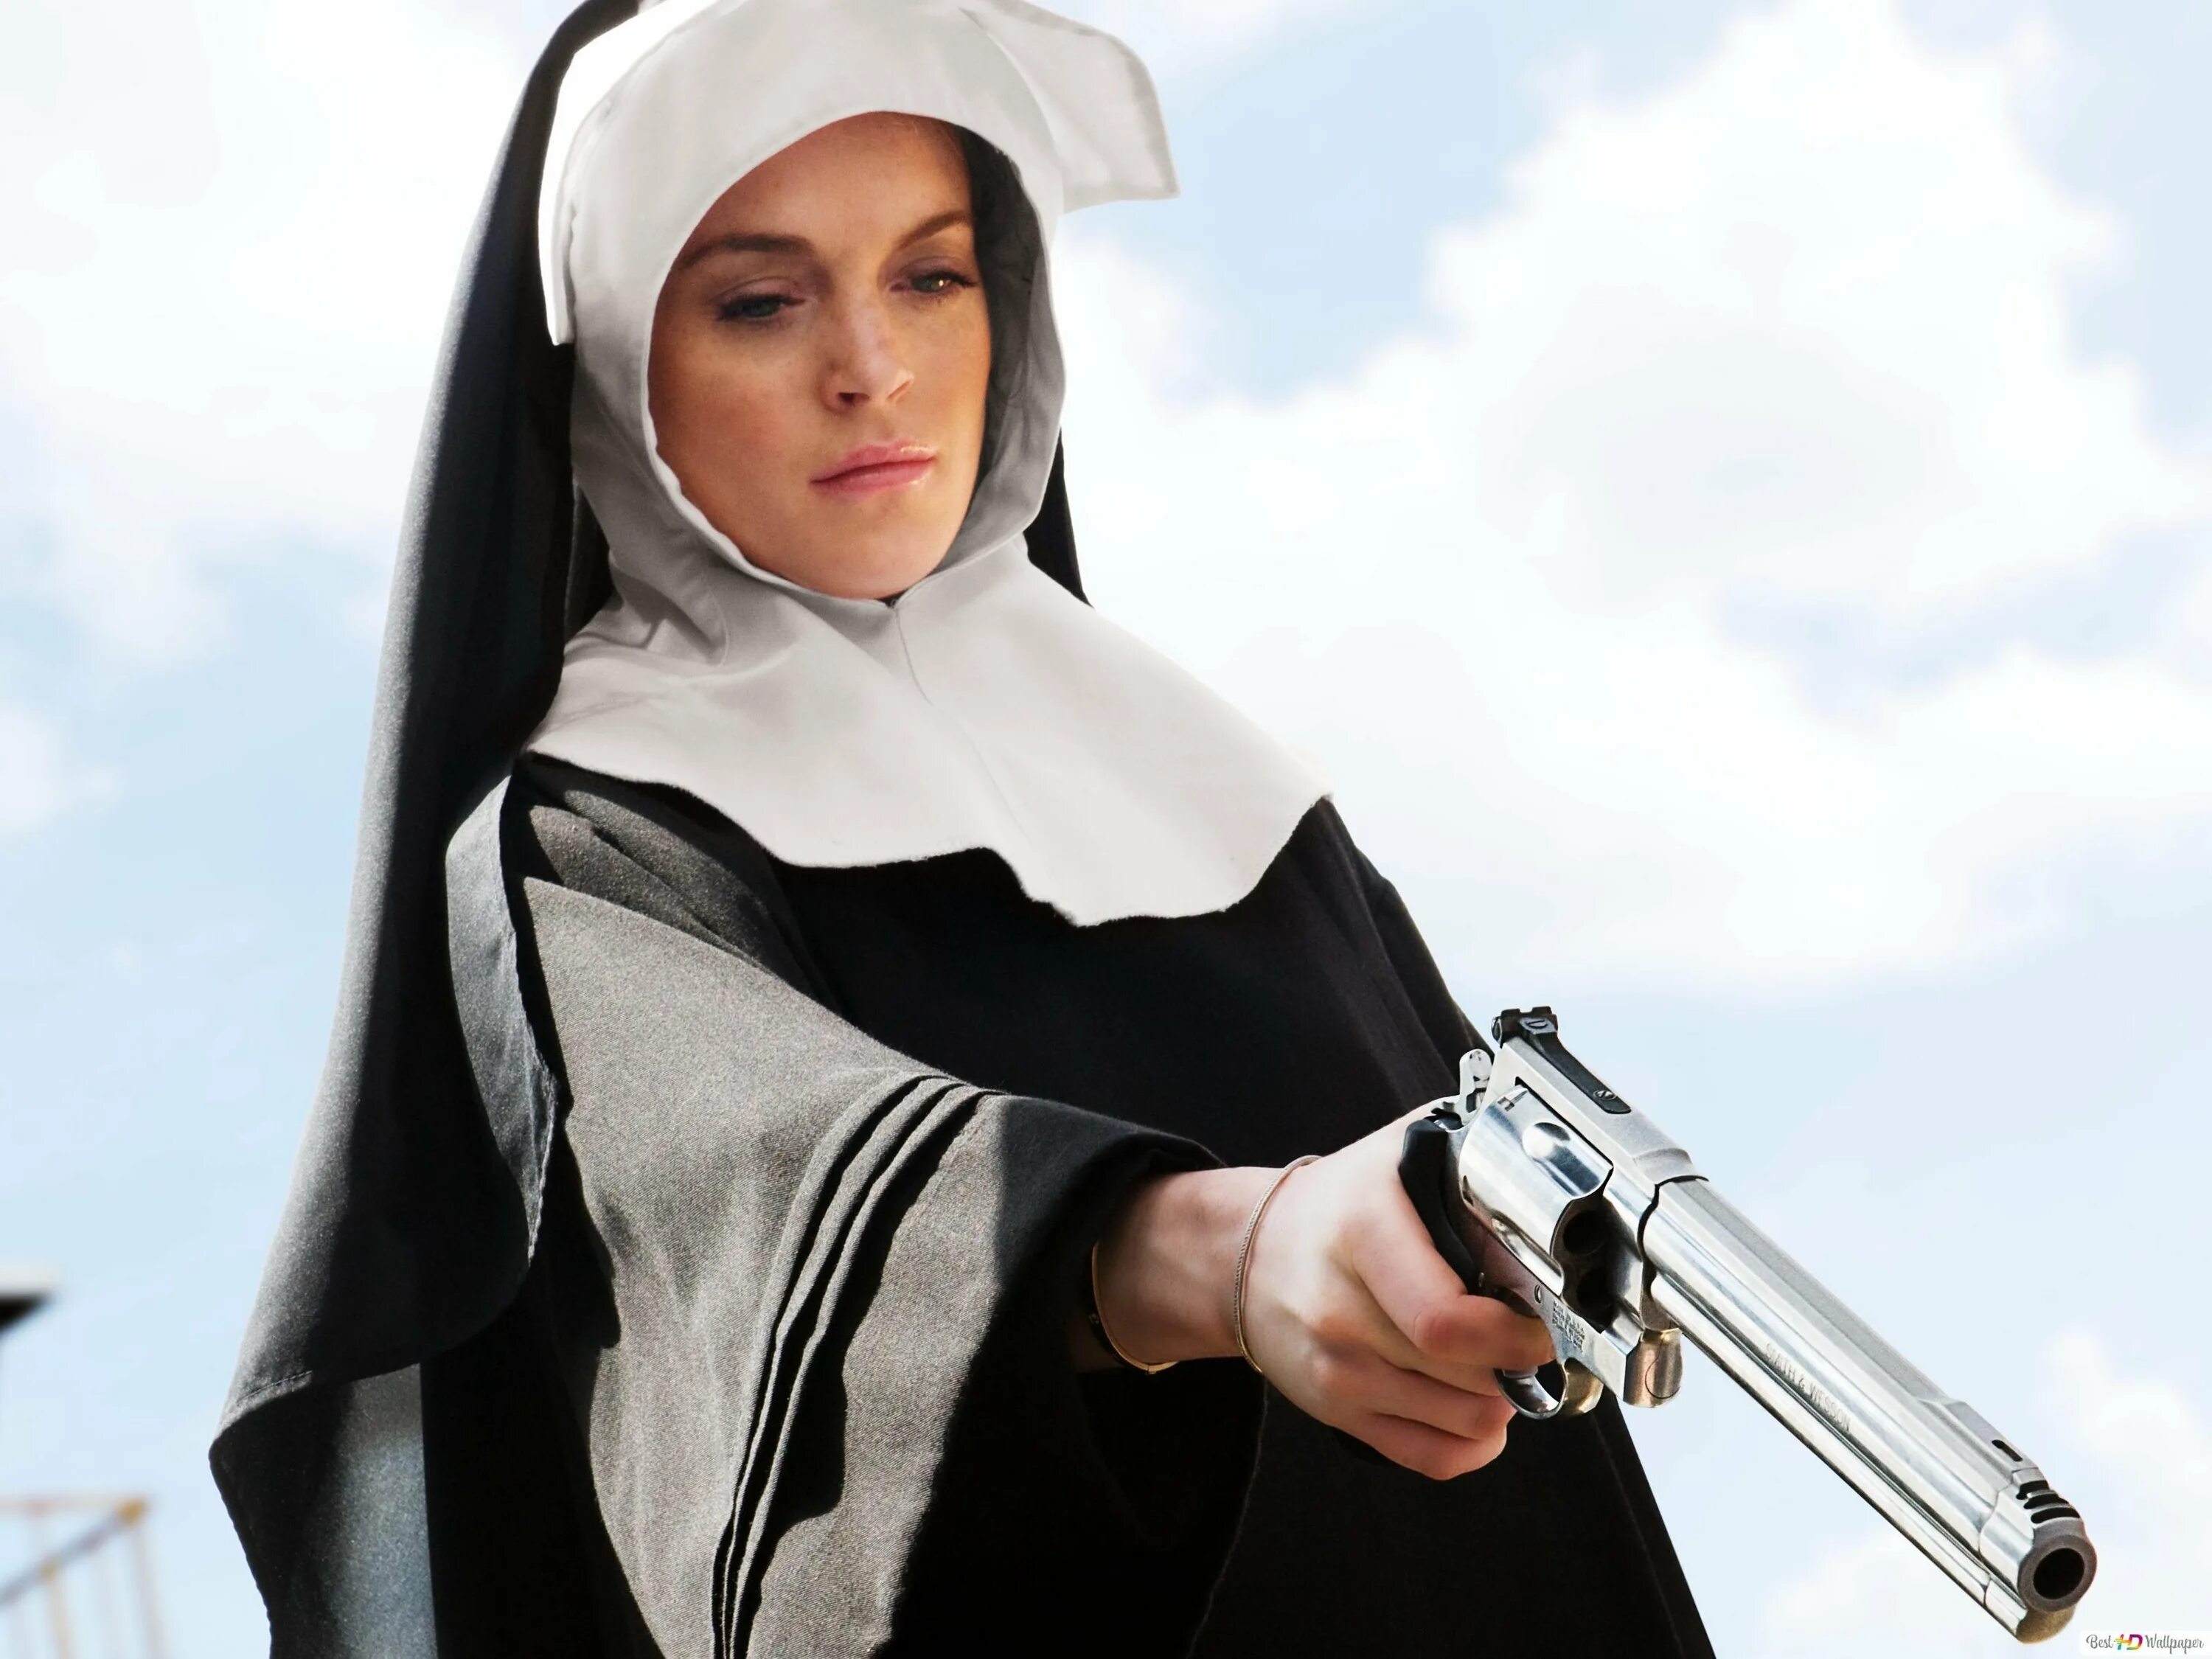 Линдси Лохан монахиня. Линдси Лохан монашка. Меган Фокс монашка. Видео про теток